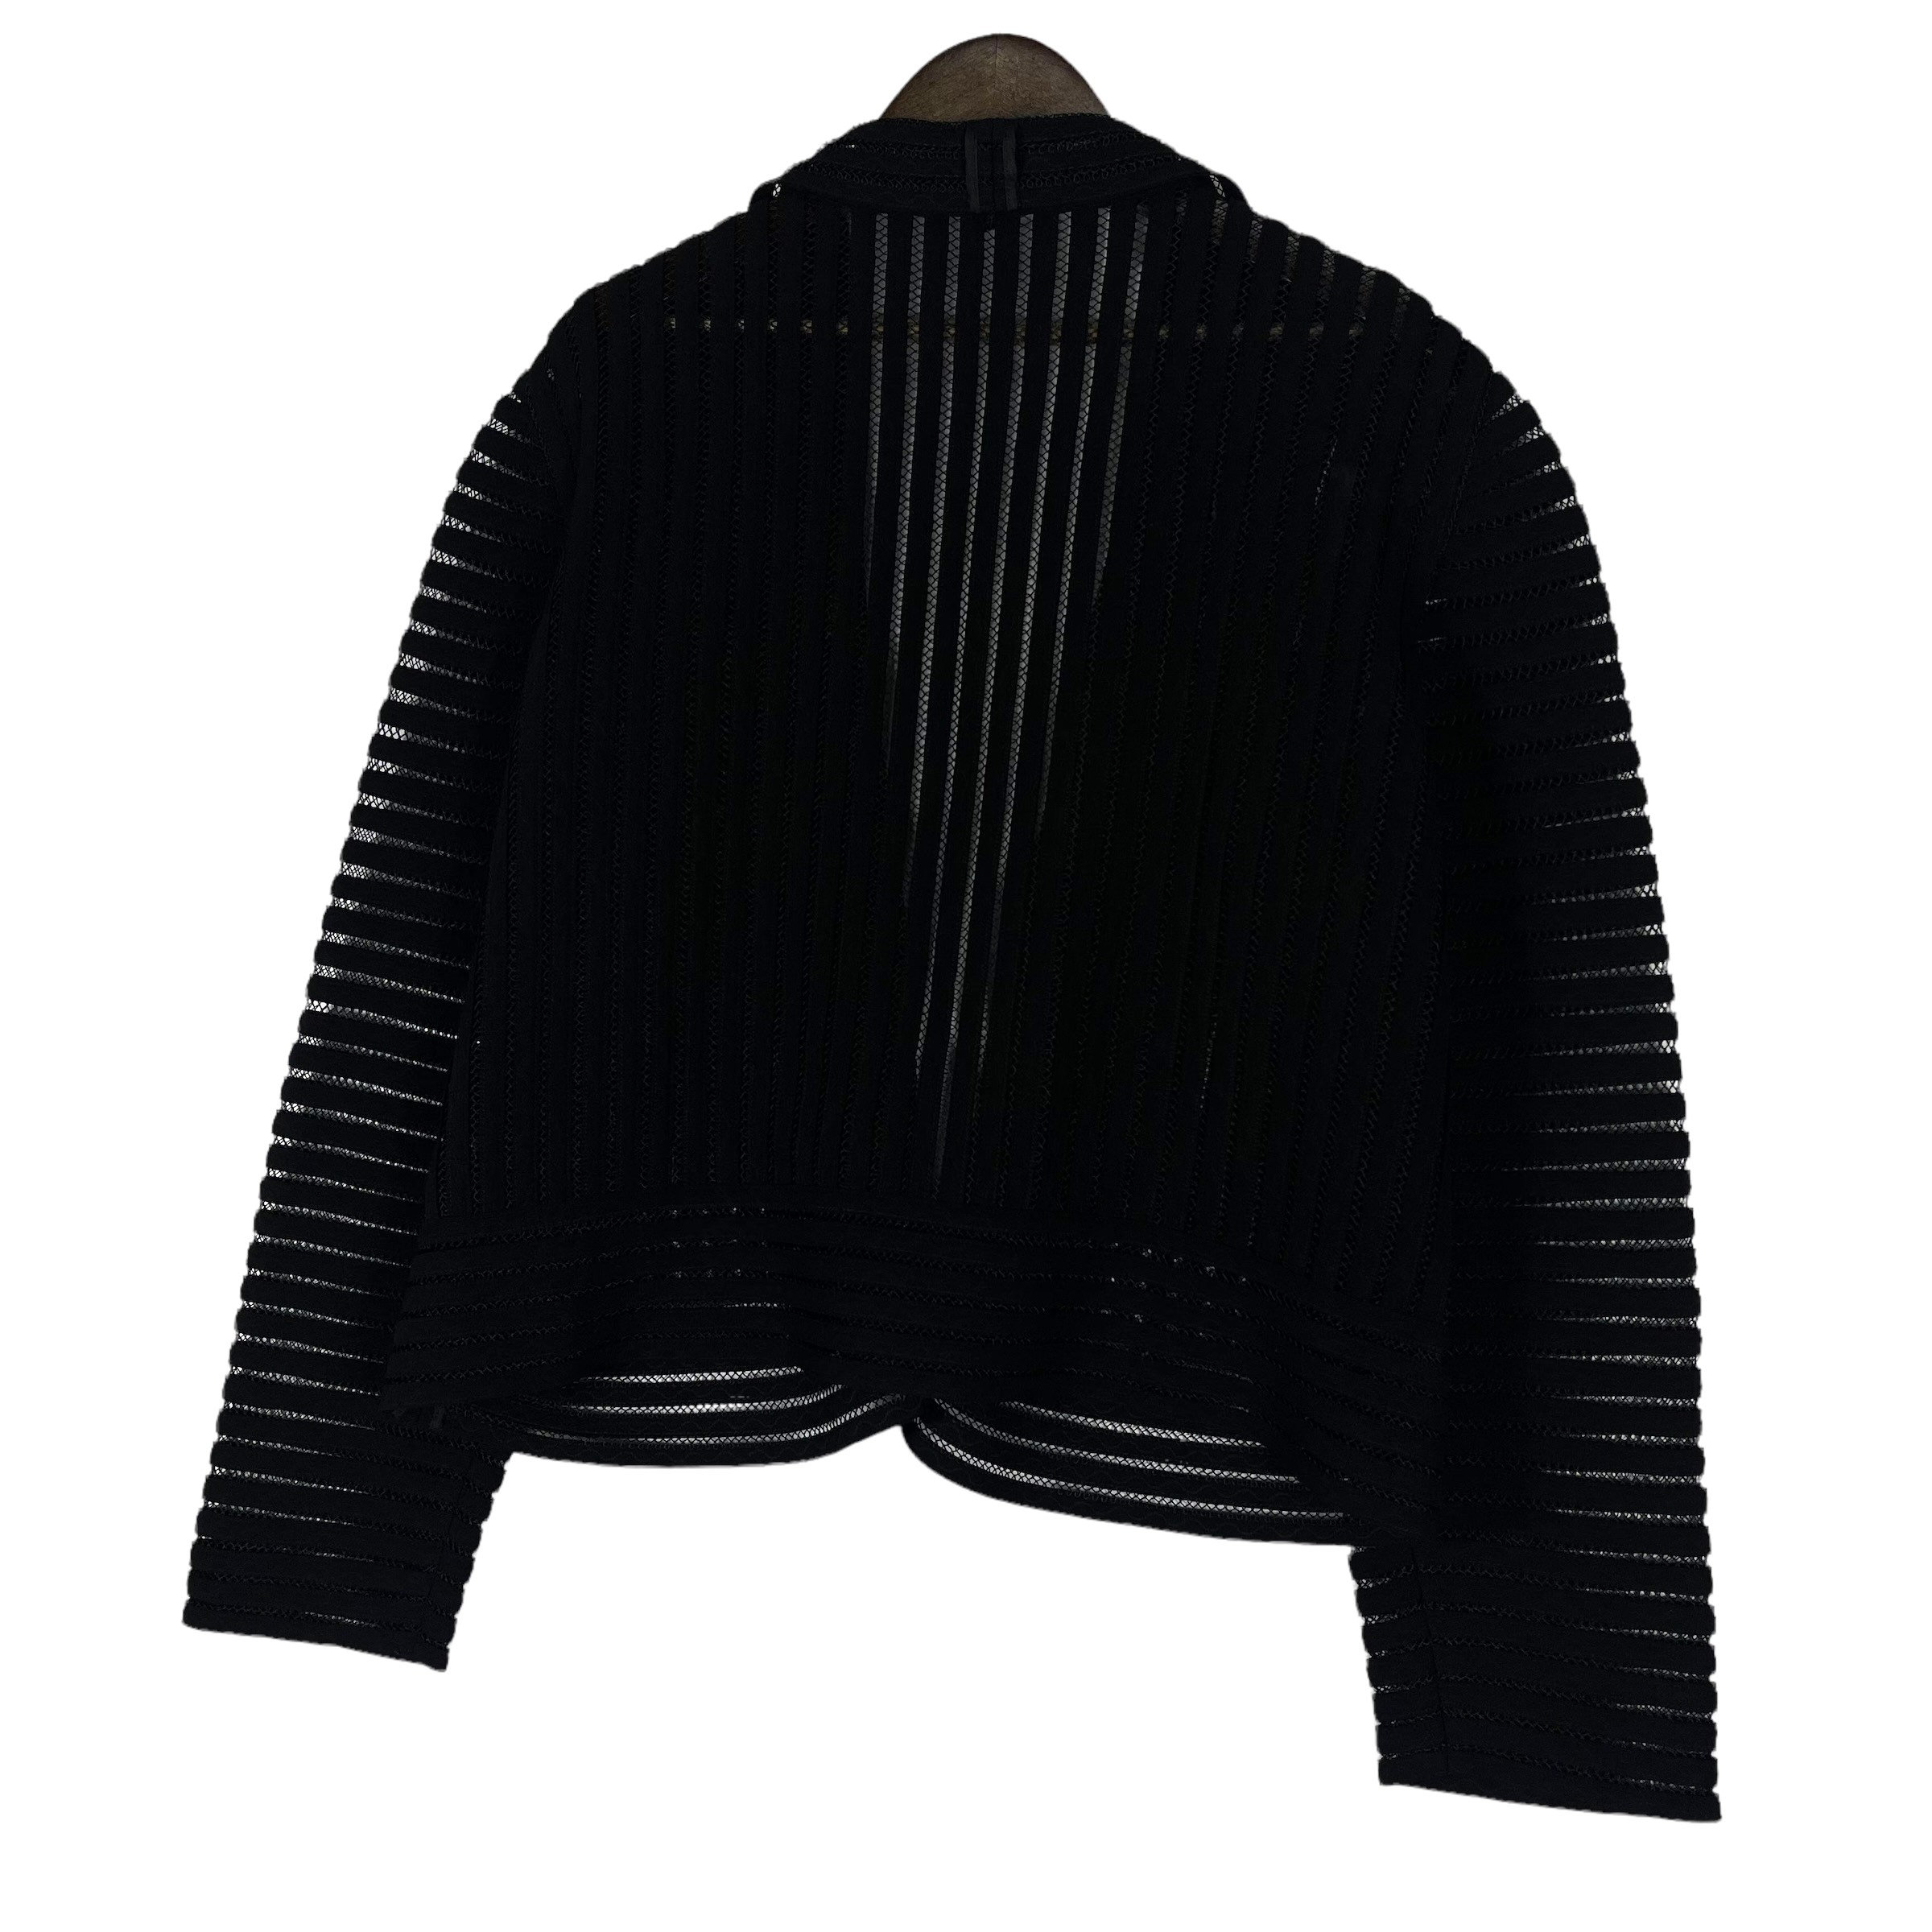 Vintage Junko Koshino Lace Mesh Jacket Black Made in Japan - Etsy